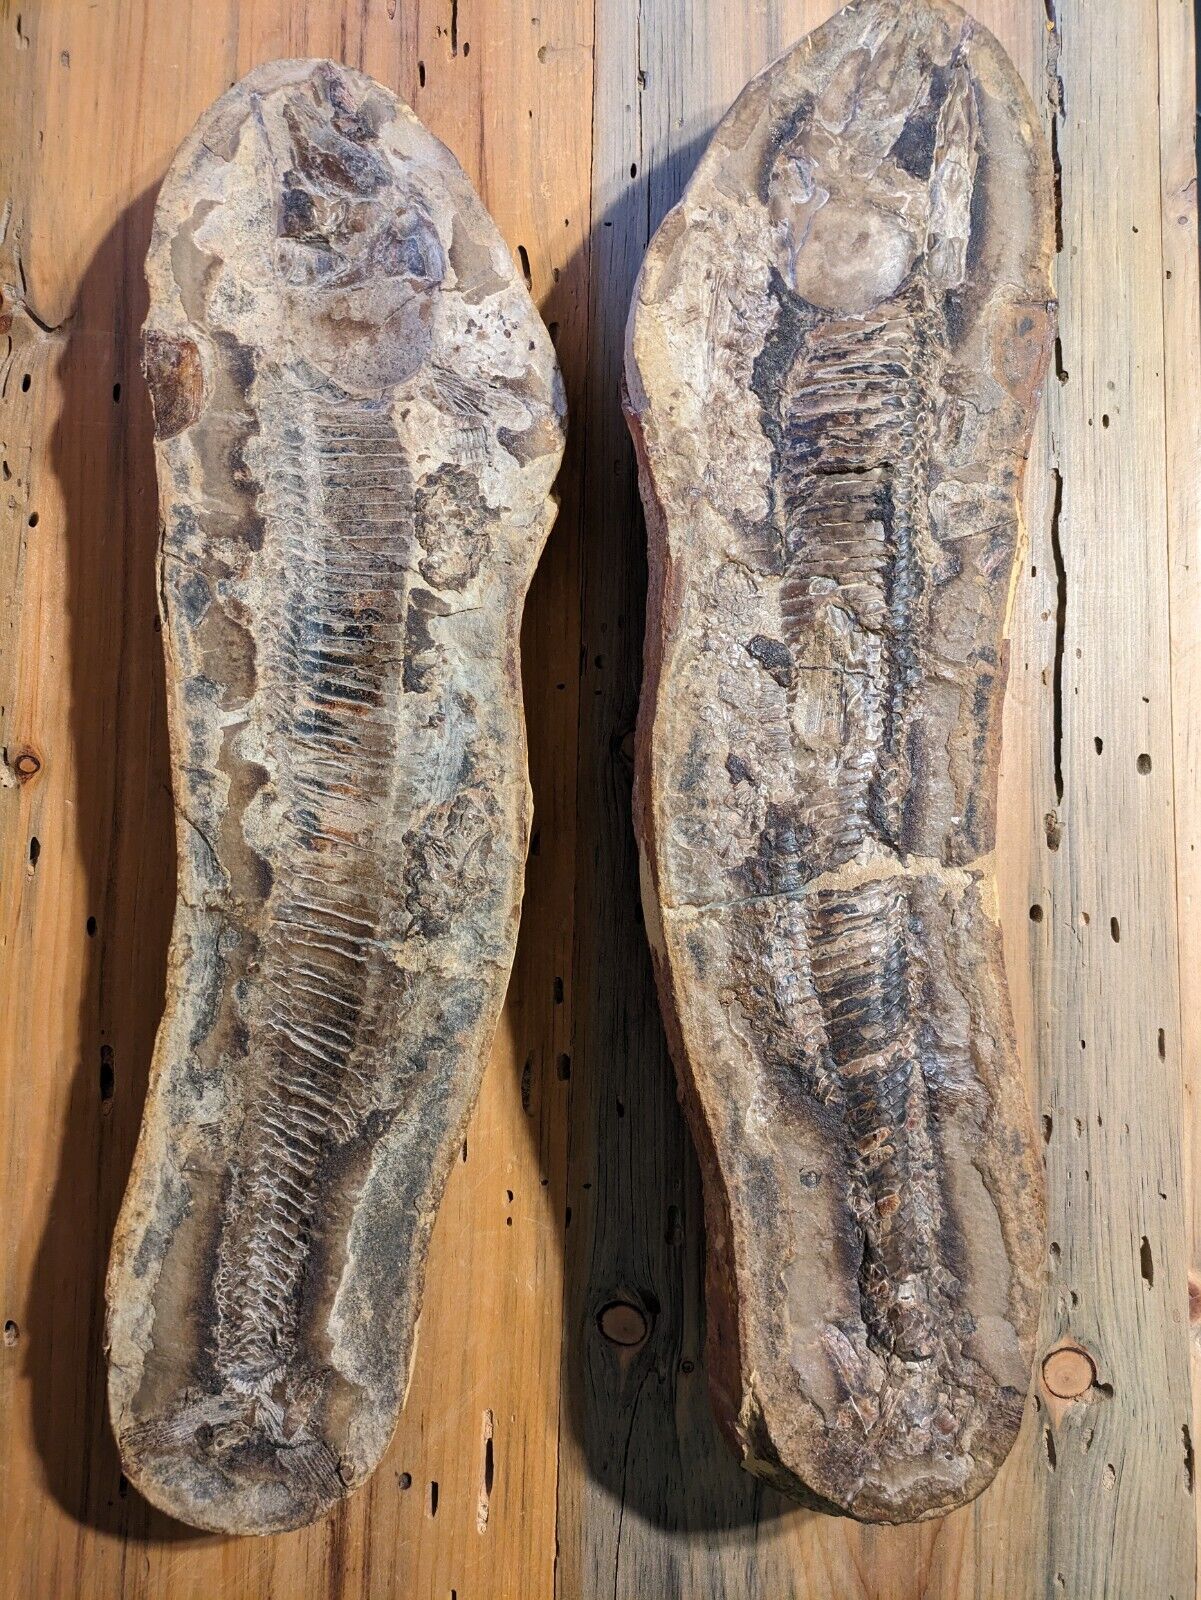 Vinctifer Comptoni Fossil Fish 22 inches 2 halves